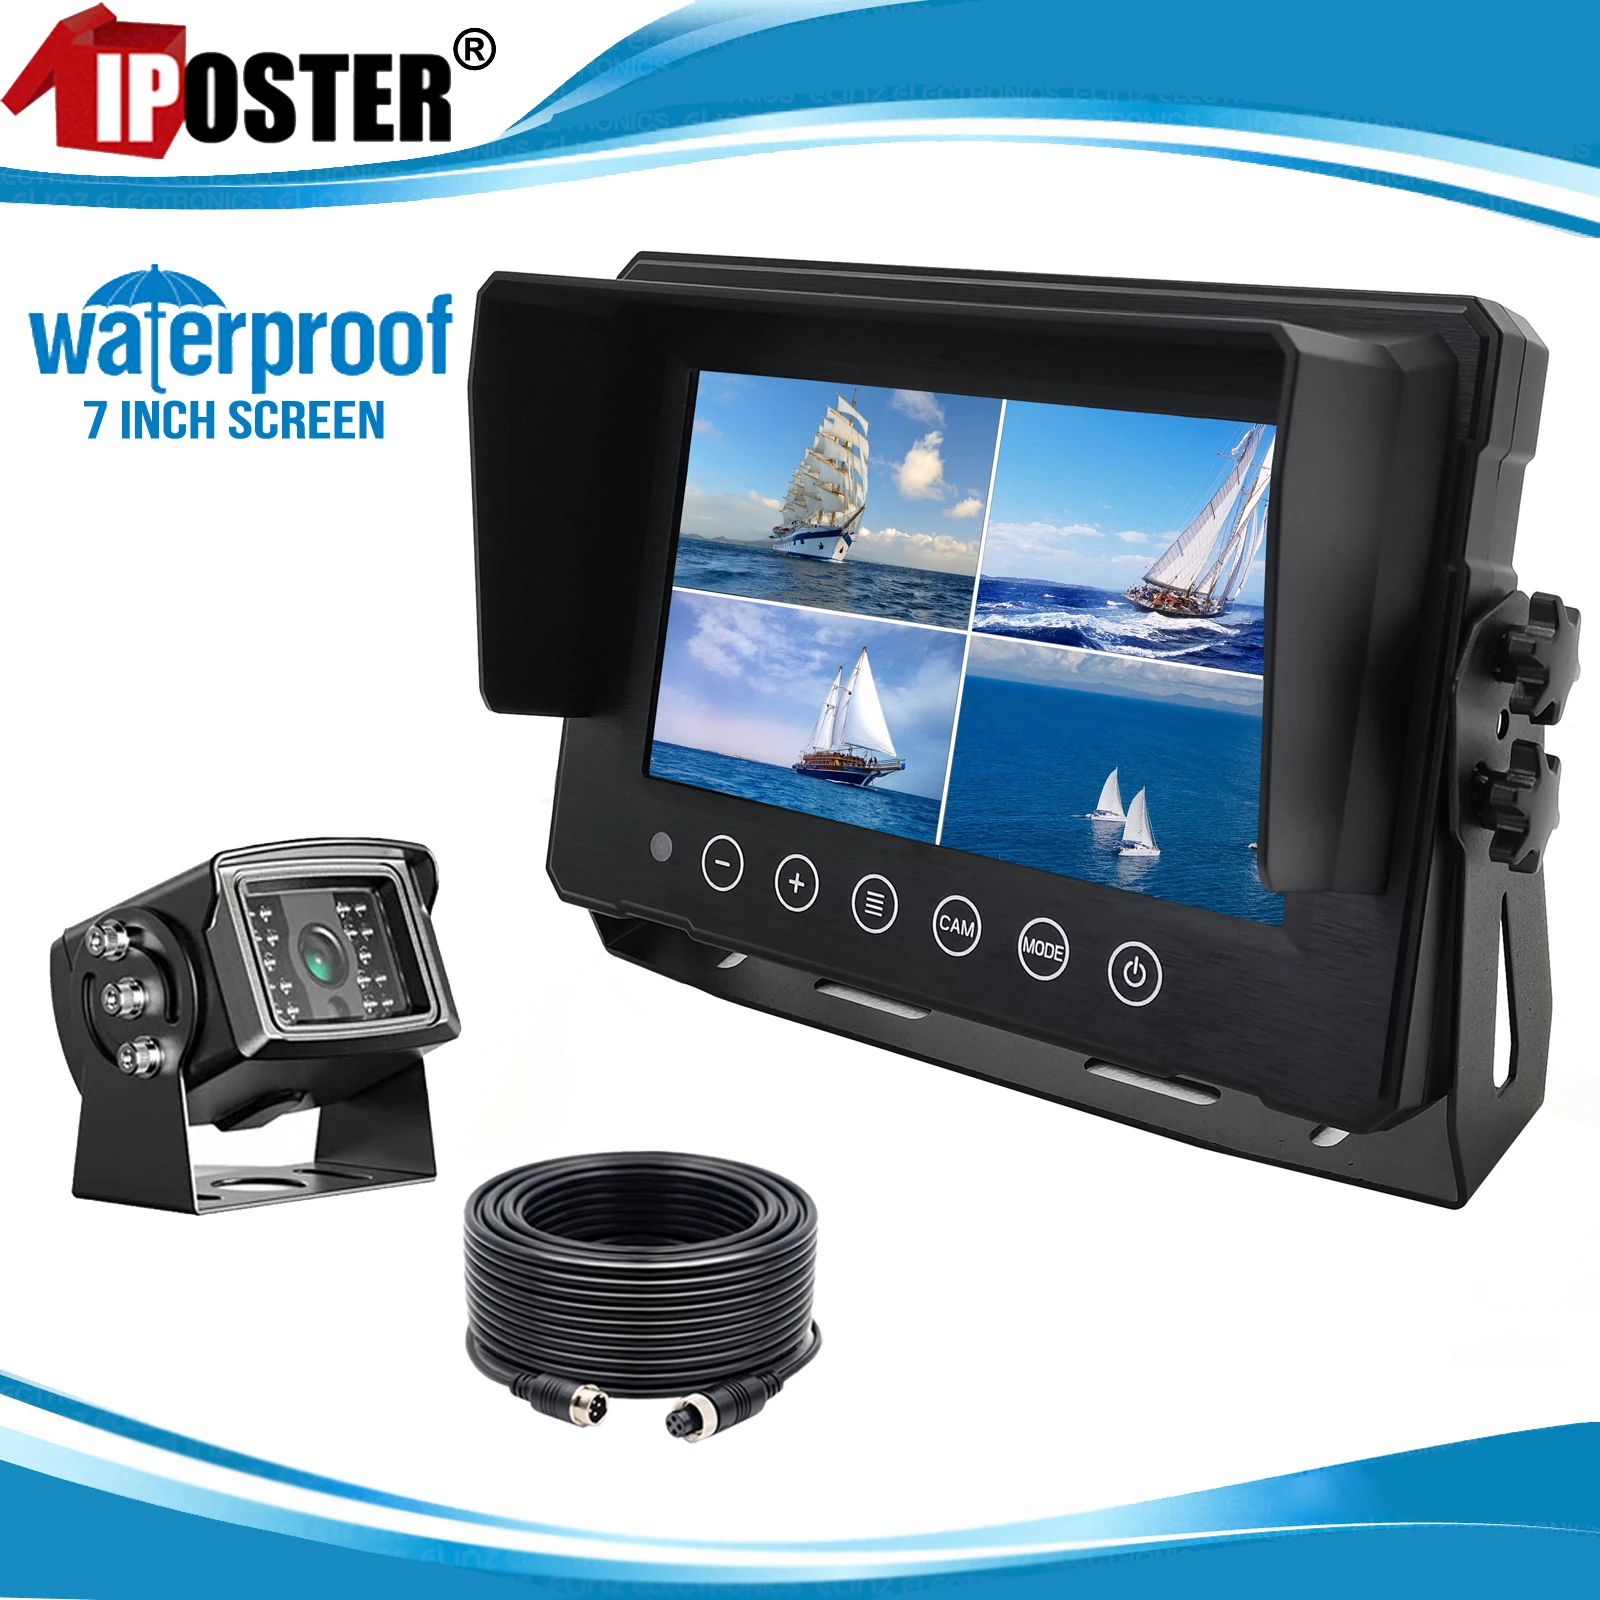 

iPoster 7 Inch Waterproof Screen AHD Monitor QUAD 4PIN 1080P Rear View Reversing Camera 12-24 For Boat Caravan Horse Float Rv Va